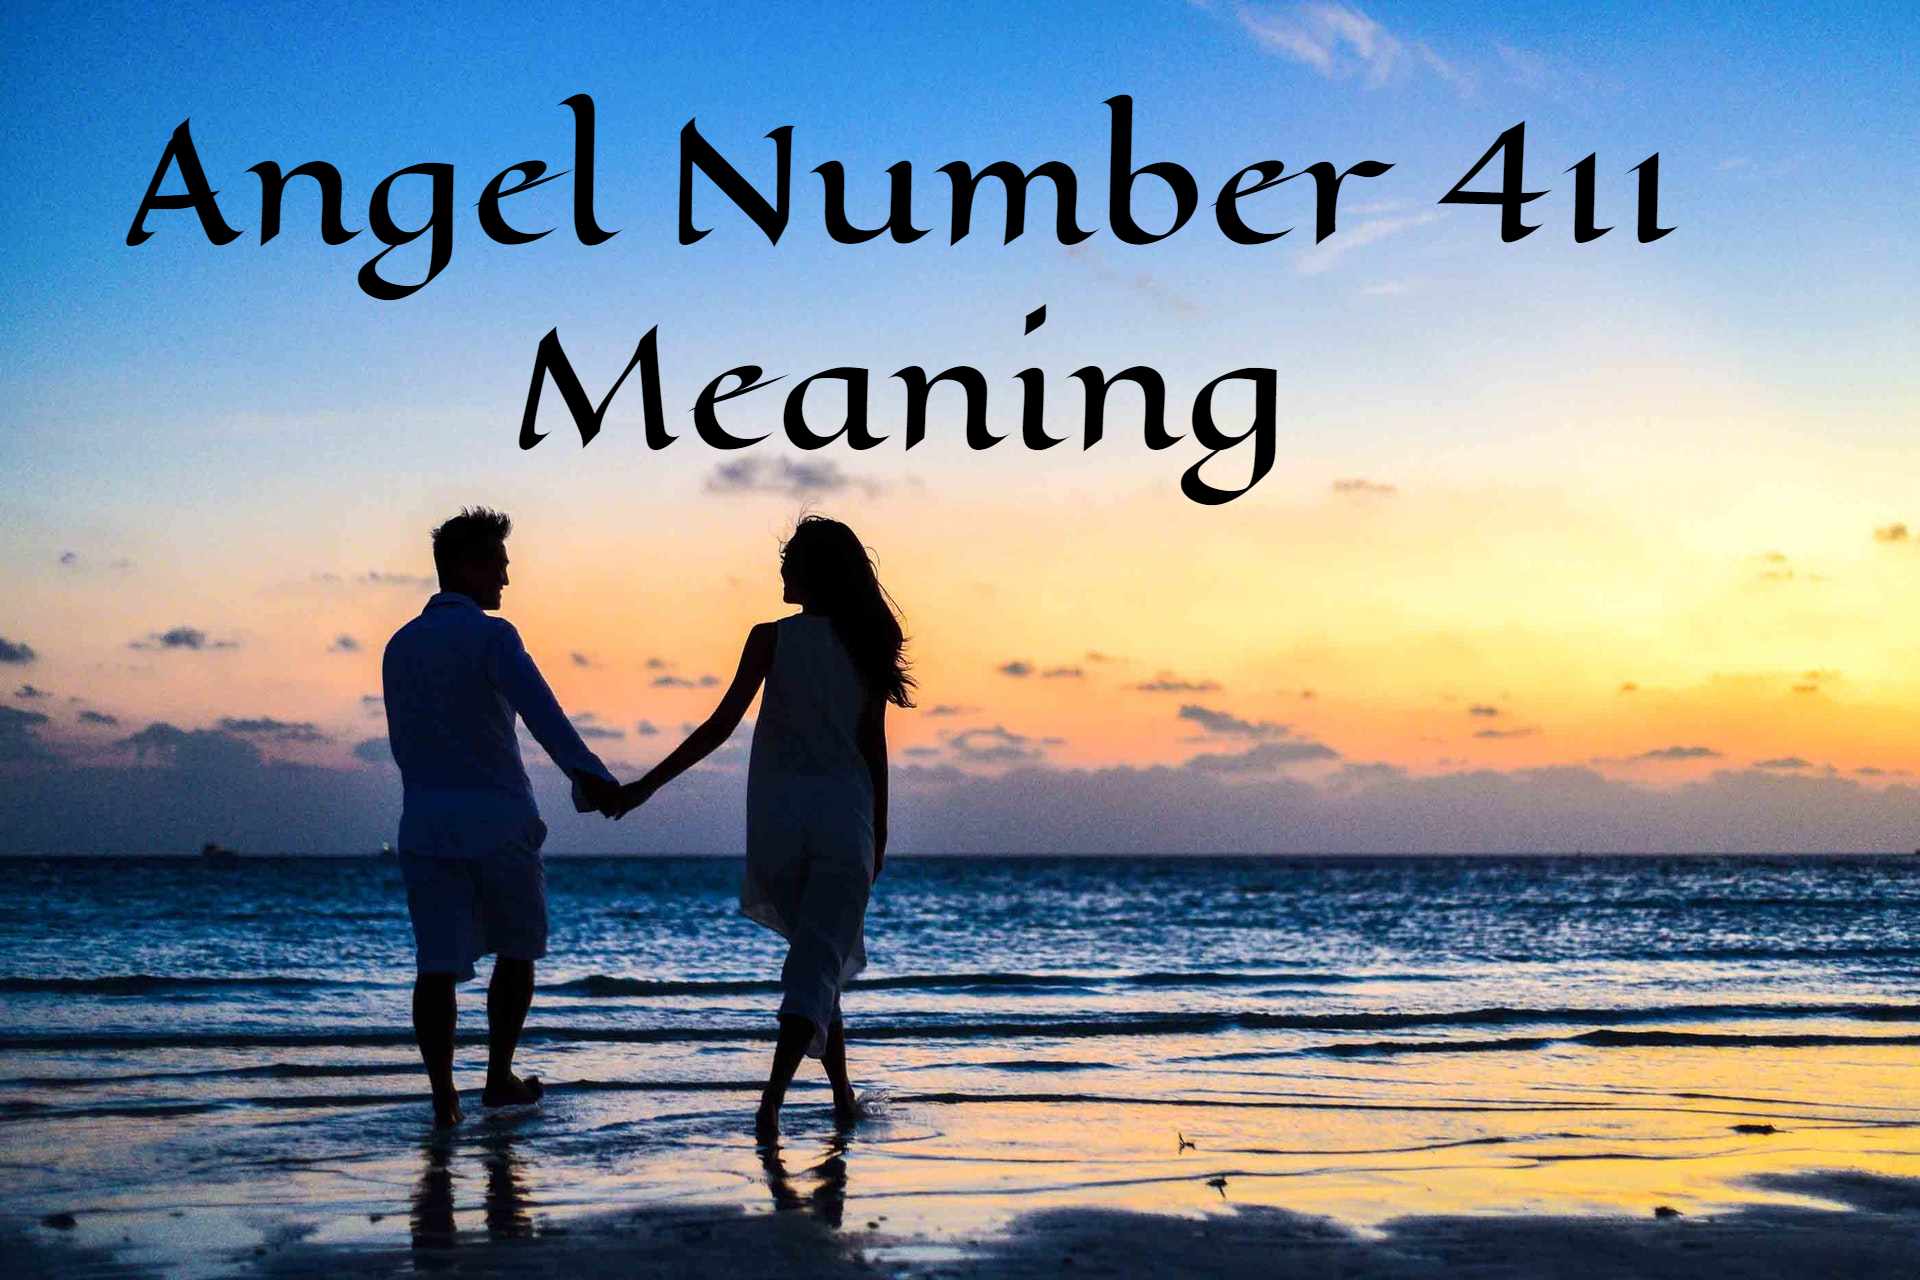 Angel Number 411 Meaning - Symbolism And Spiritual Interpretation